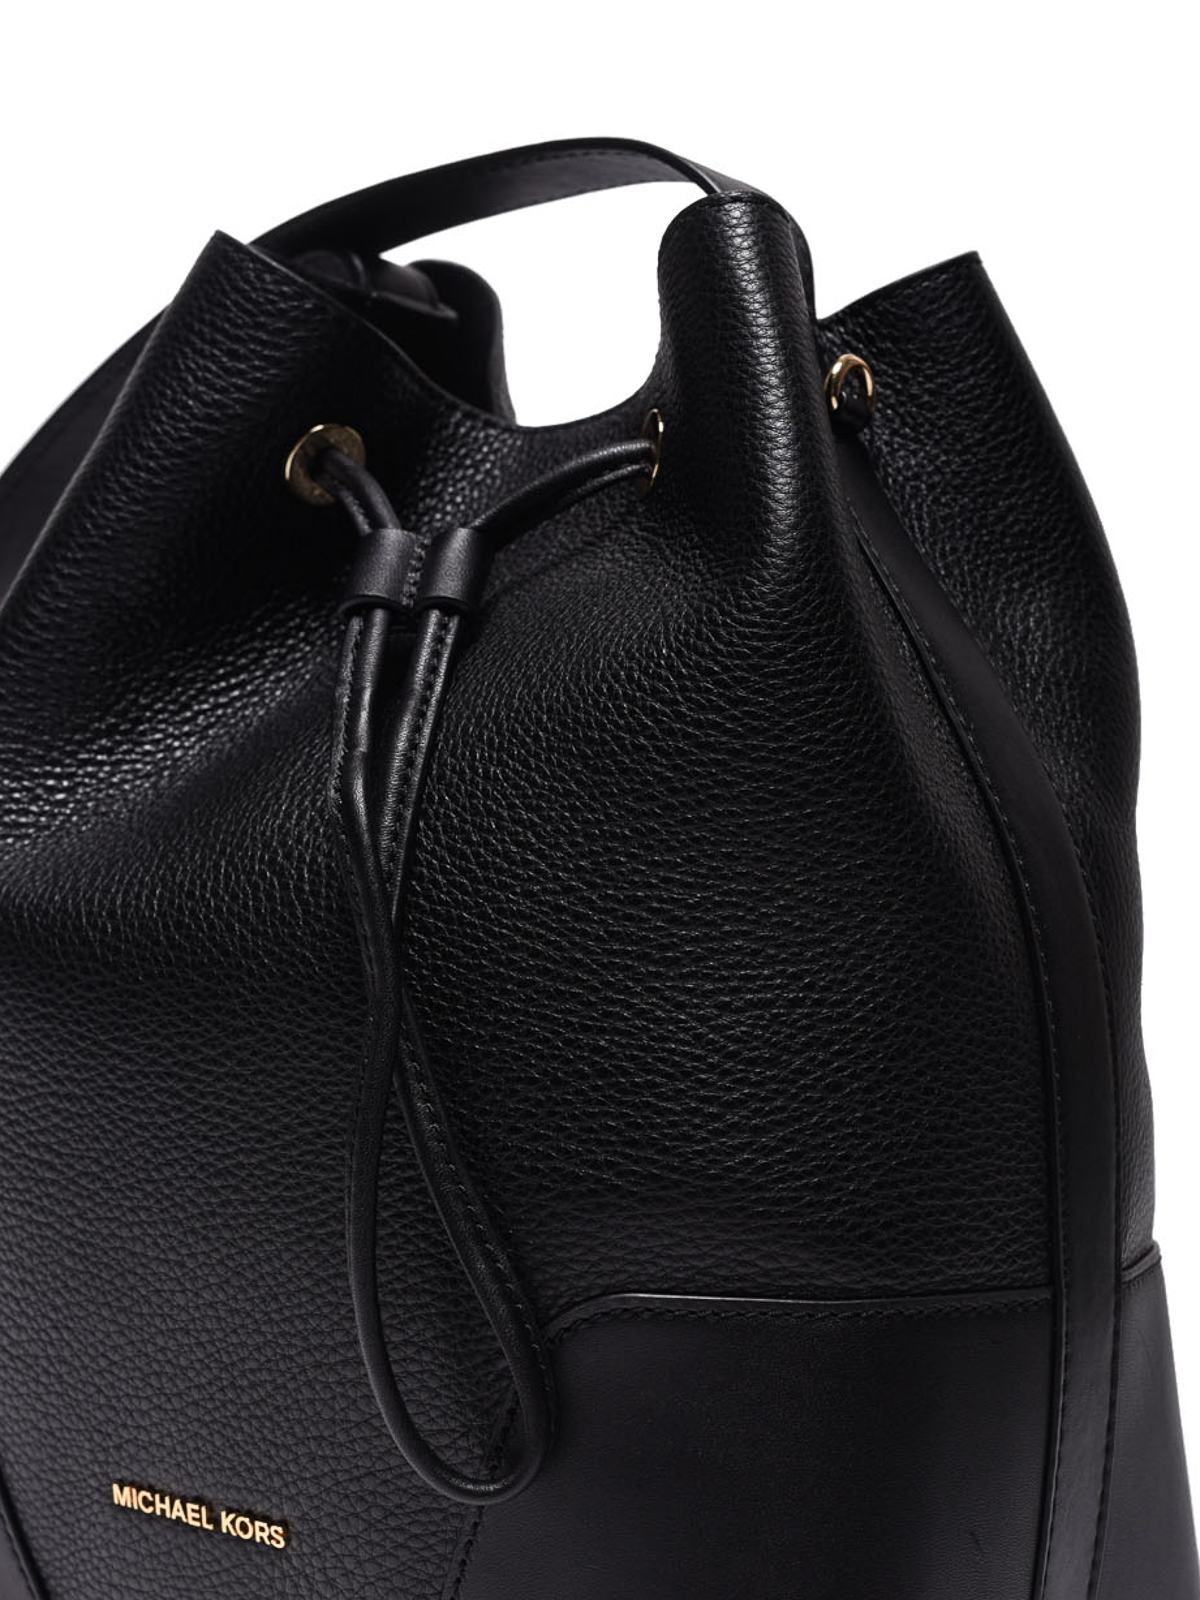 Bucket bags Michael Kors - Cary medium black bucket bag - 30F8G0CM2T001